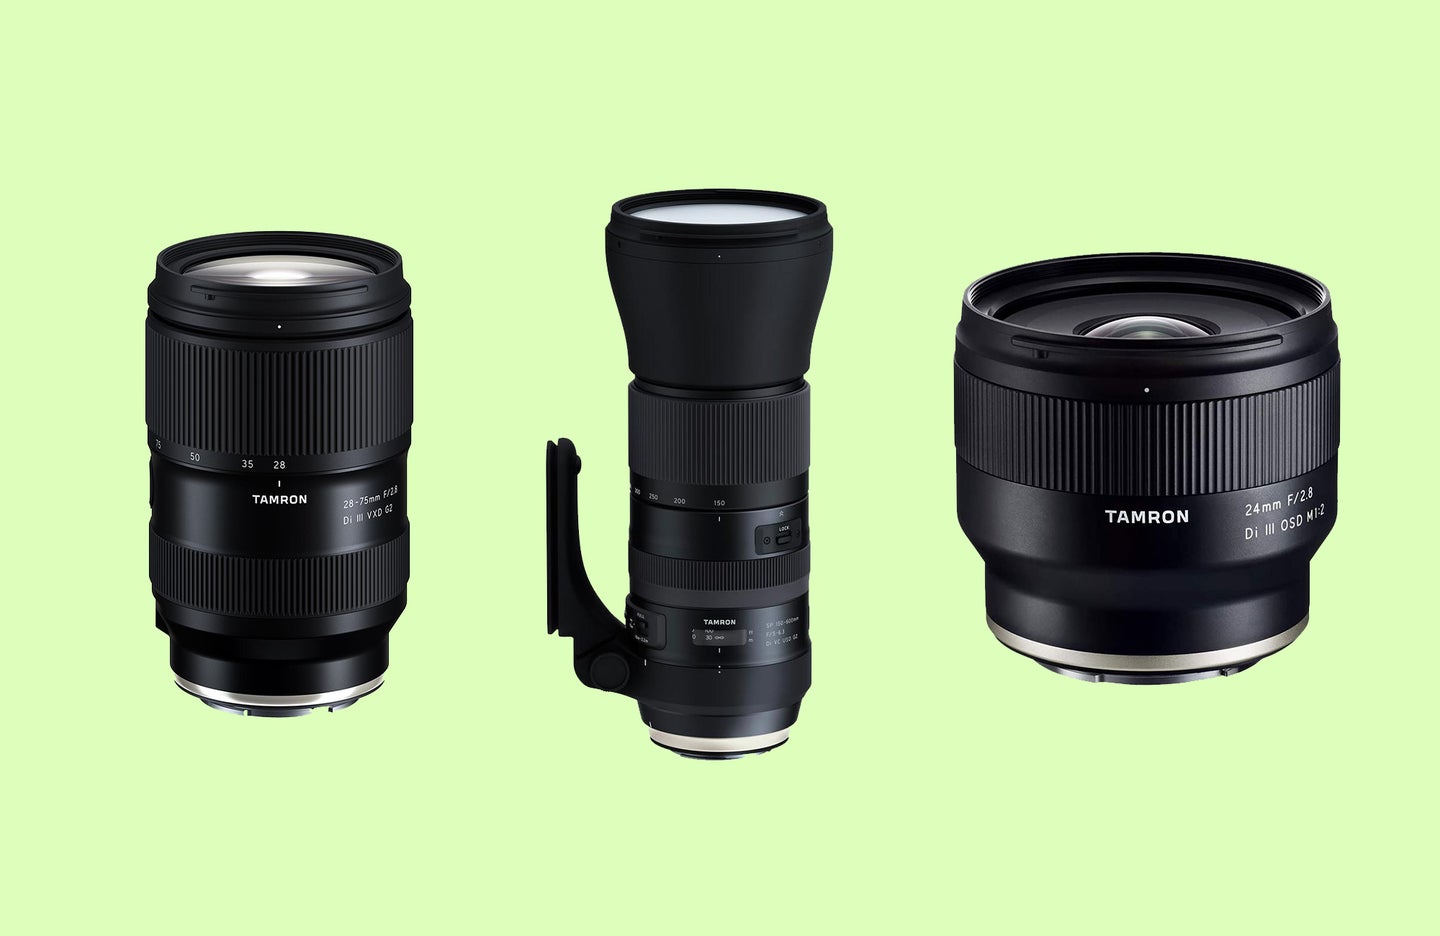 Tamron 24mm f/2.8 Di III OSD Lens, Tamron SP 150-600mm f/5-6.3 Di VC USD G2 Lens, and Tamron 28-75mm f/2.8 Di III VXD G2 lens against a light green background